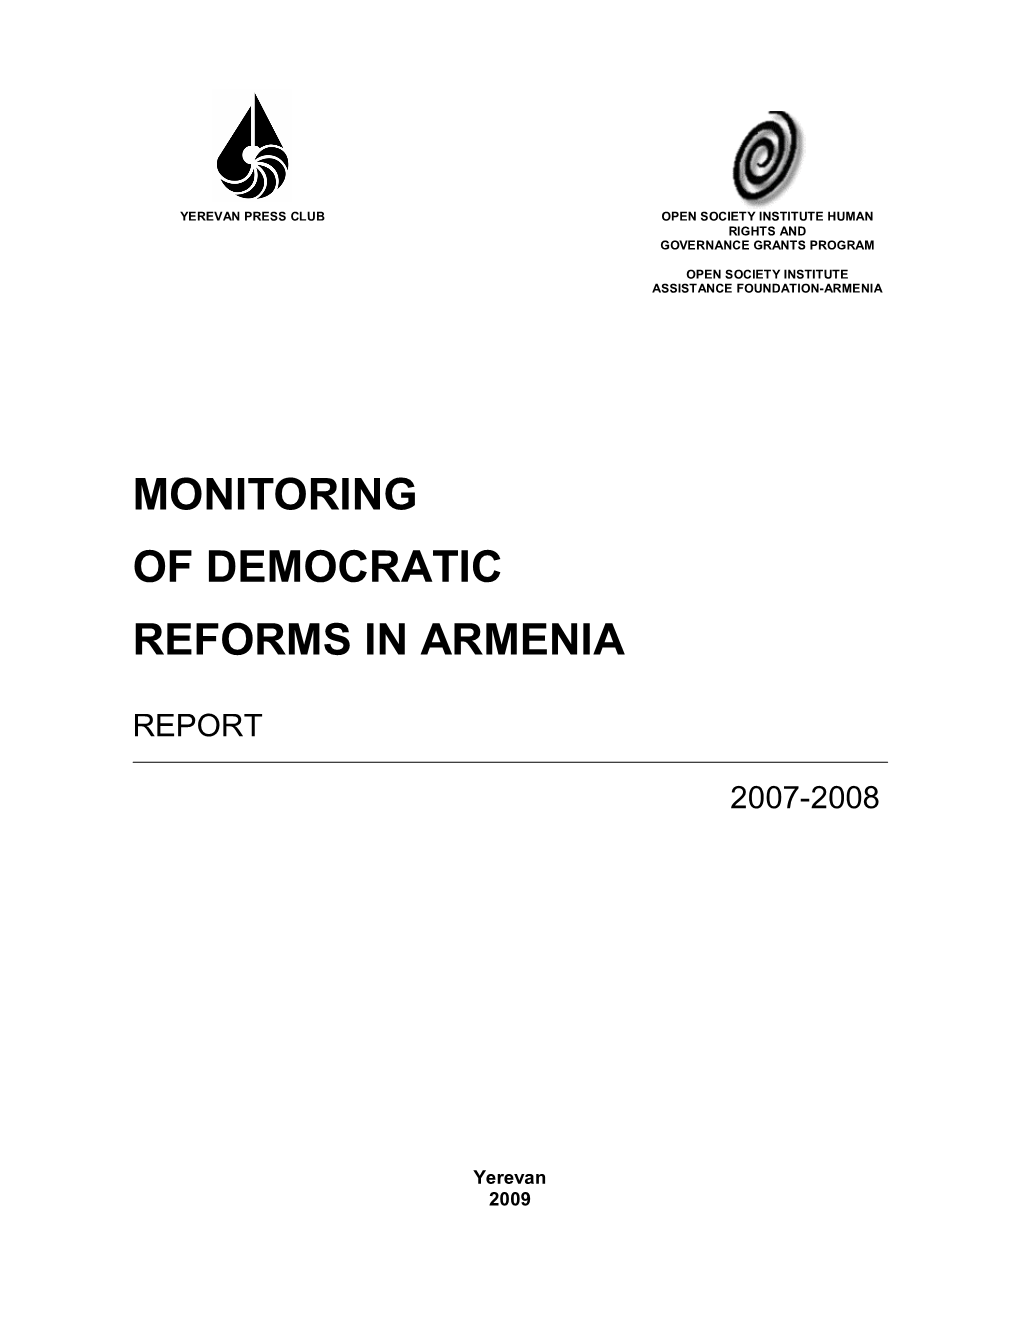 Monitoring of Democratic Reforms in Armenia